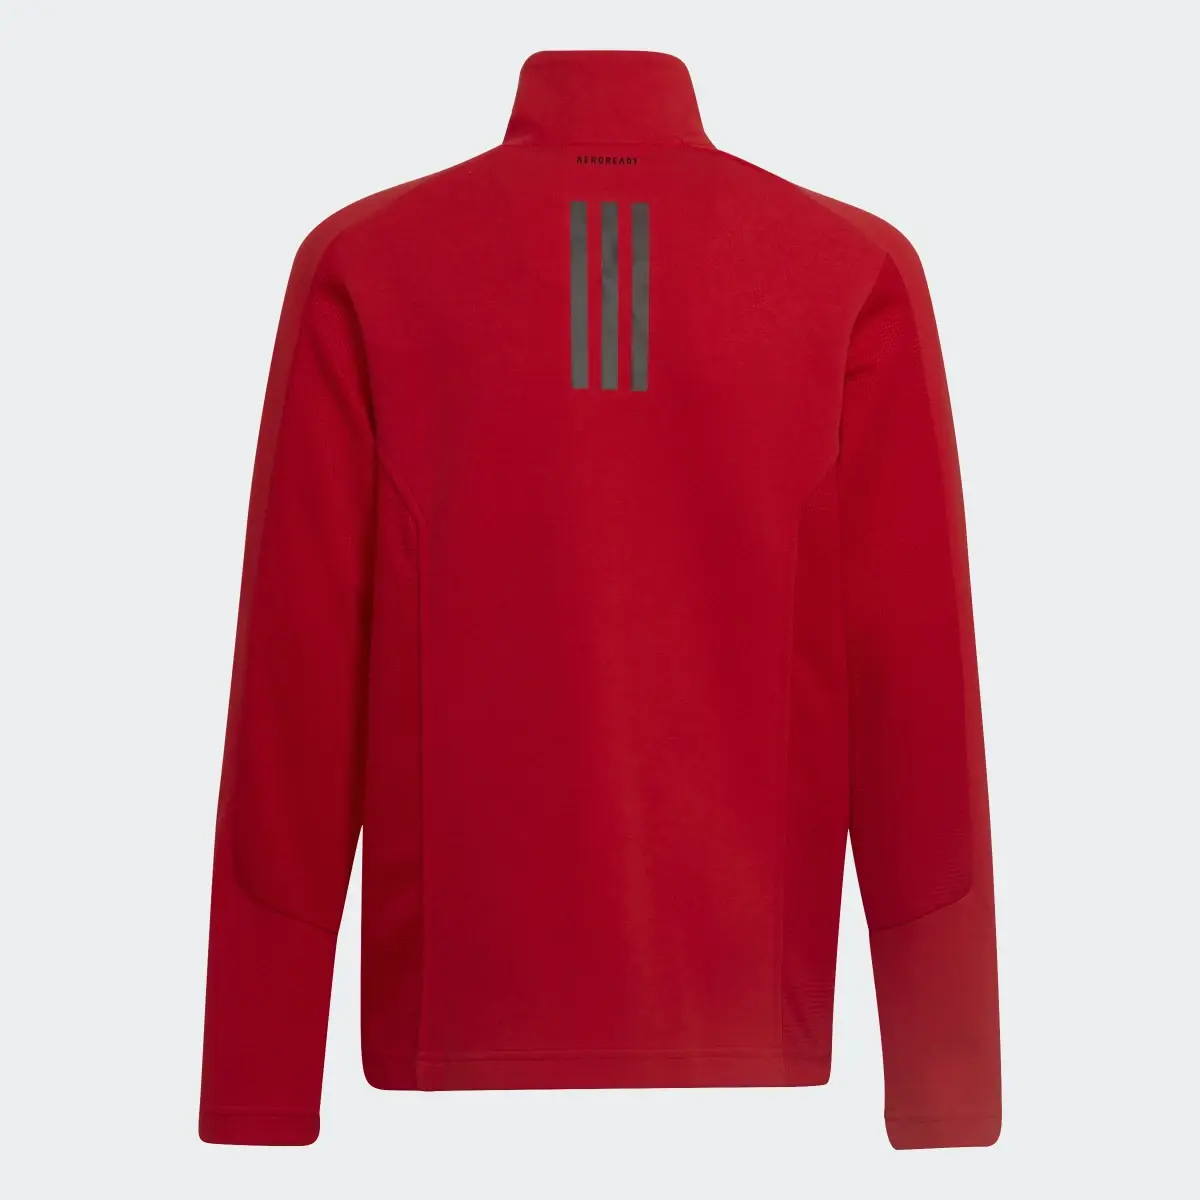 Adidas XFG Techy Inspired Sweatshirt. 2